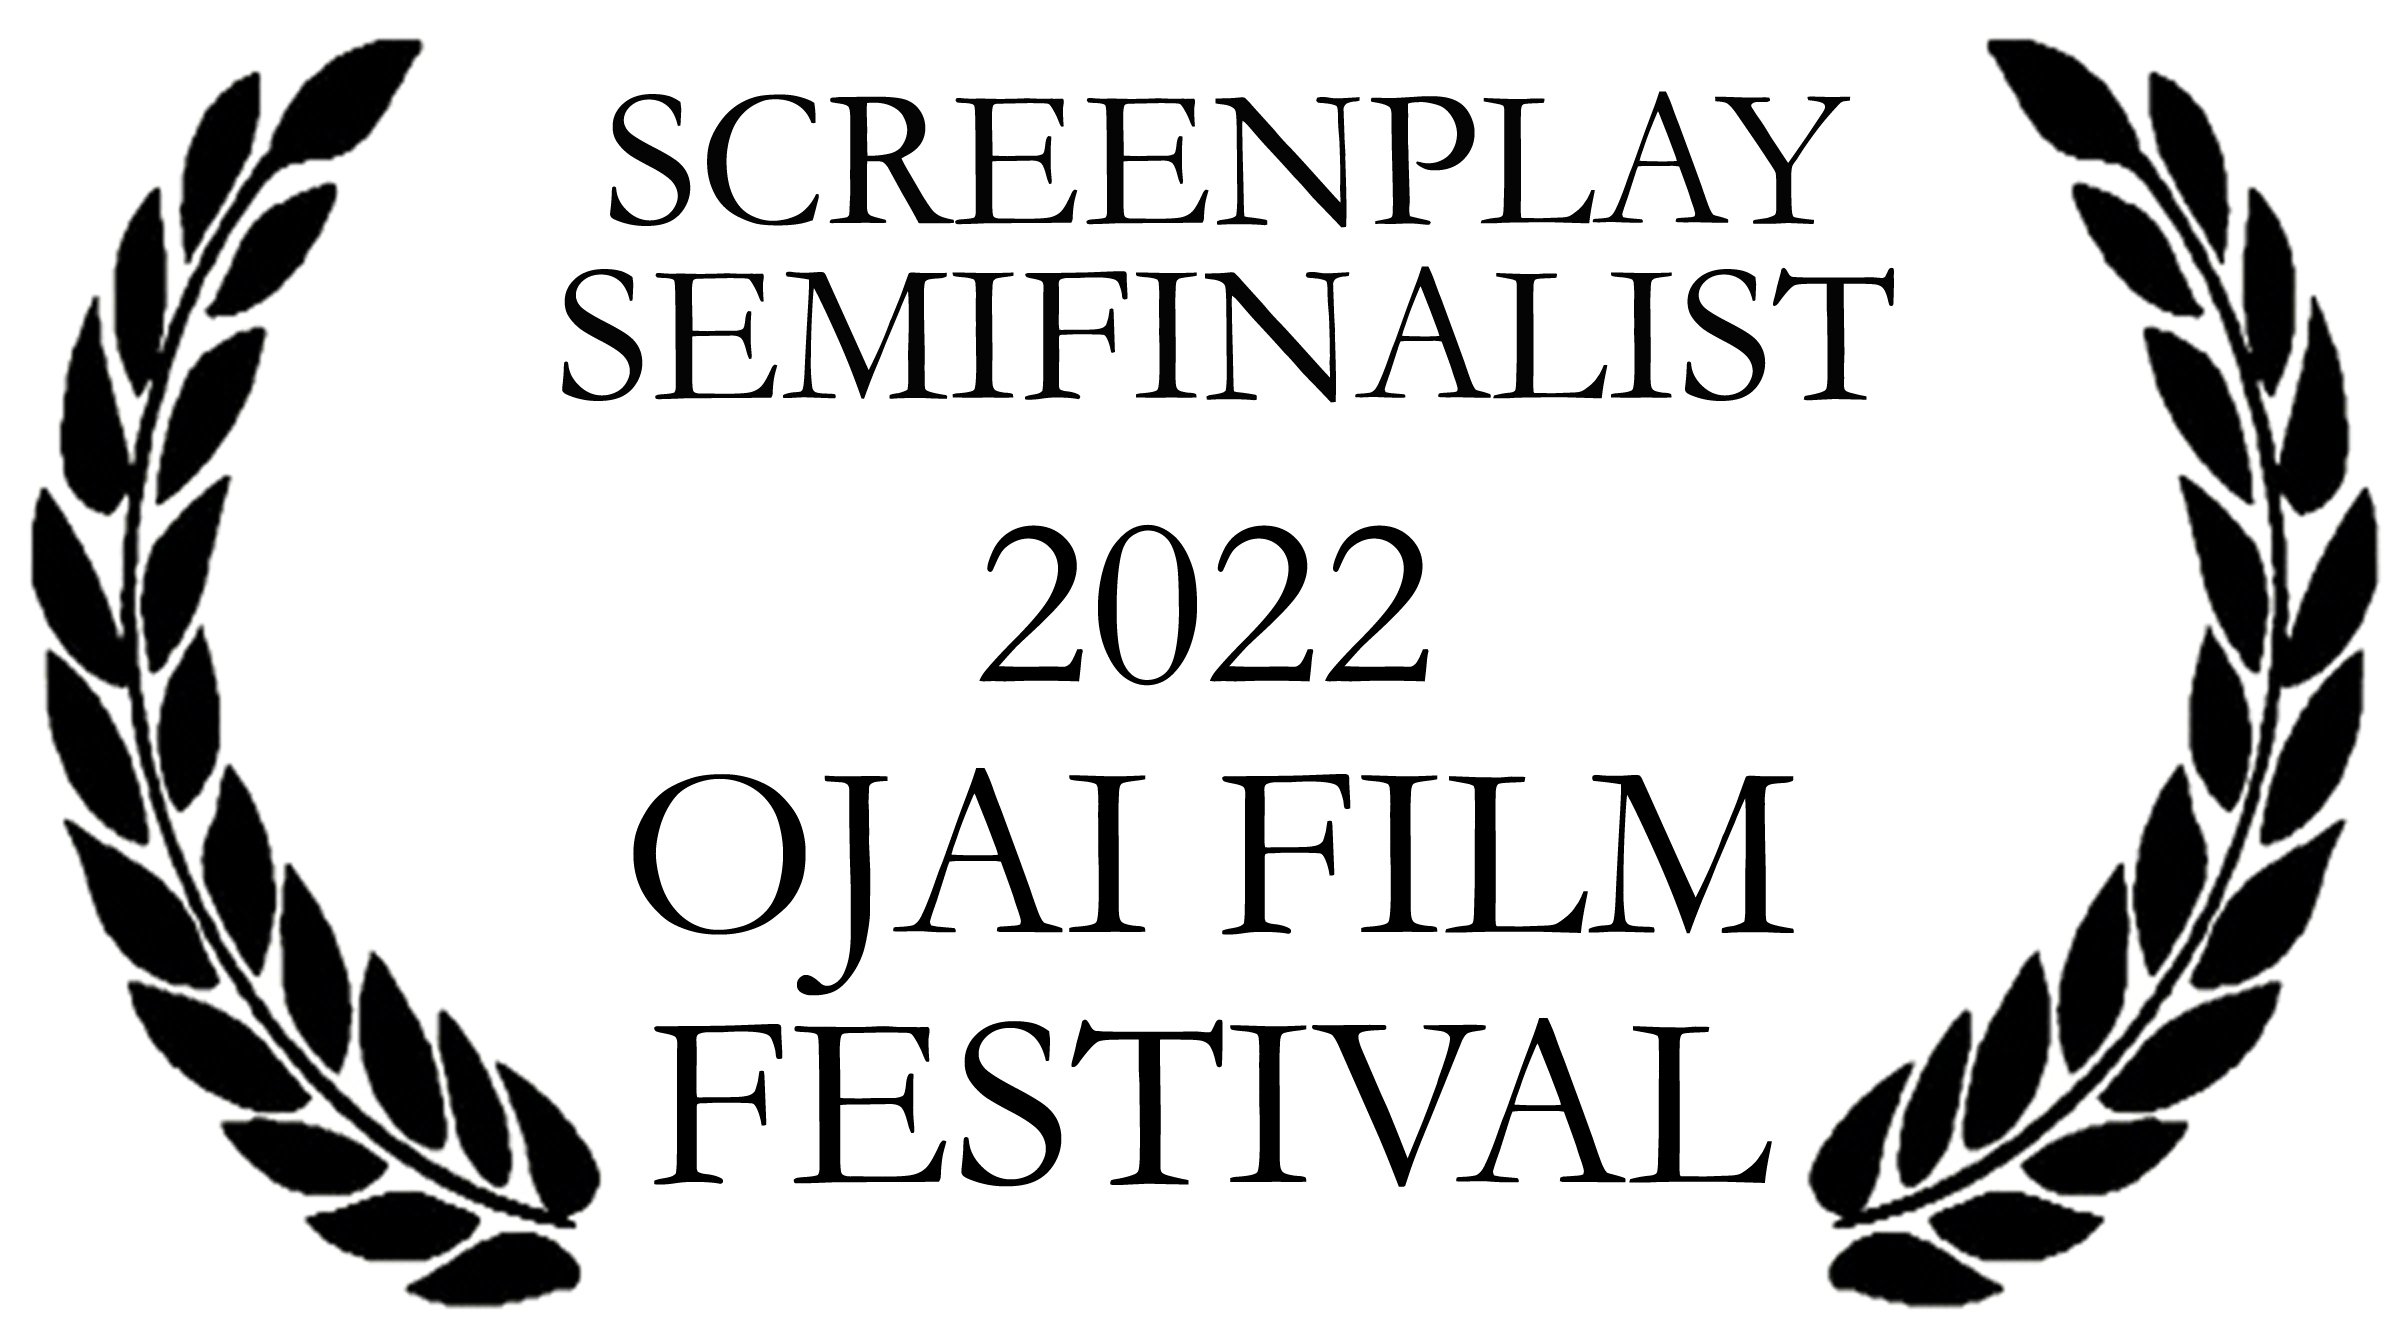 Ojai Film Festival Screenplay Semis Laurels 2022.jpg